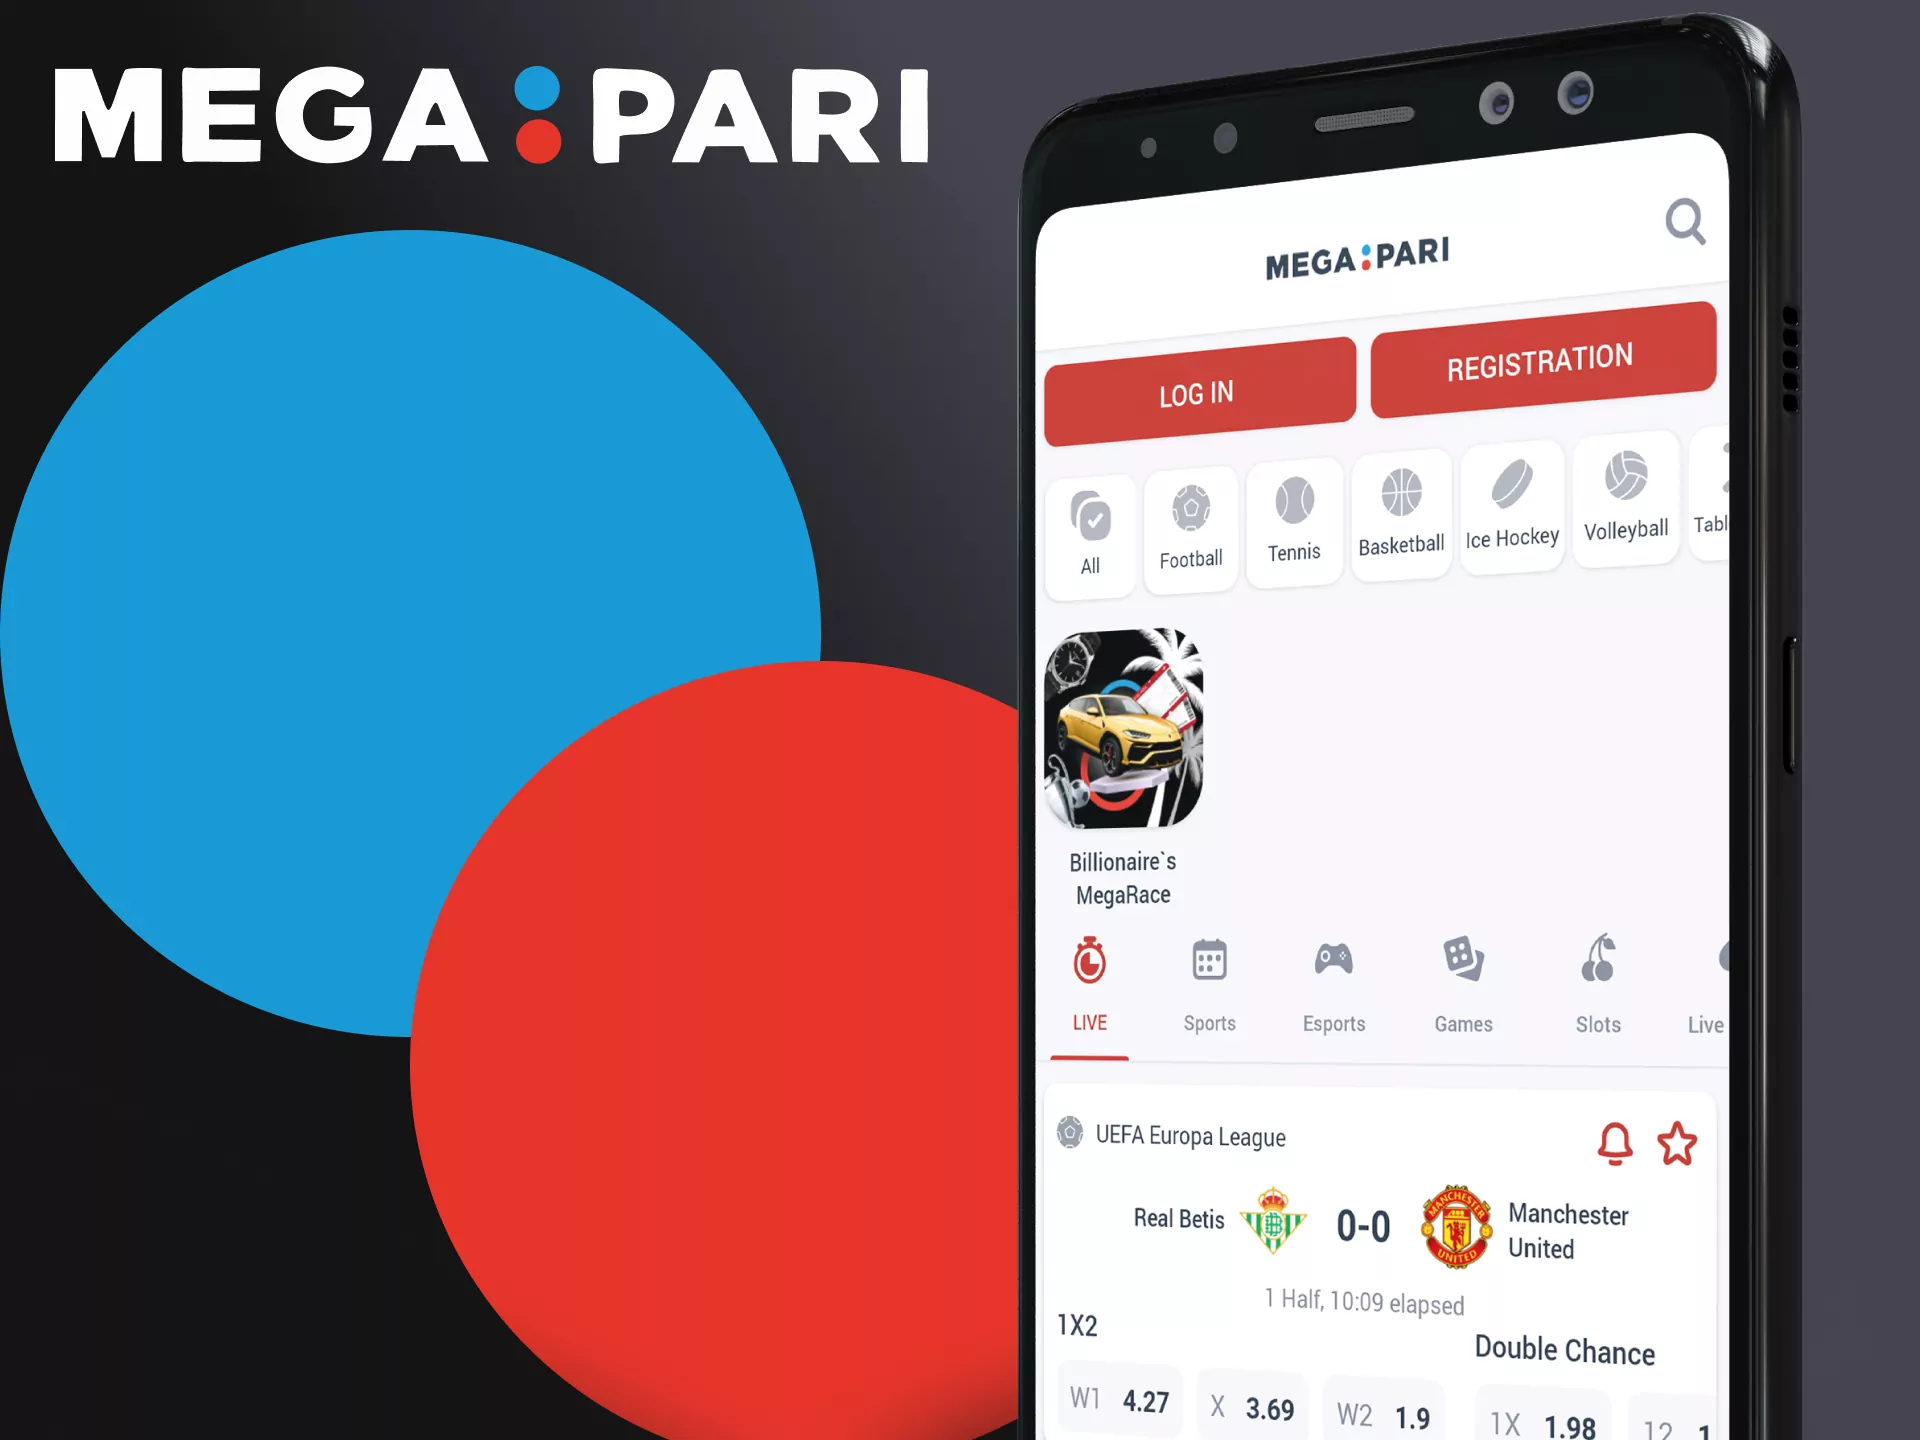 The Megapari app has a user-friendly and unique design.